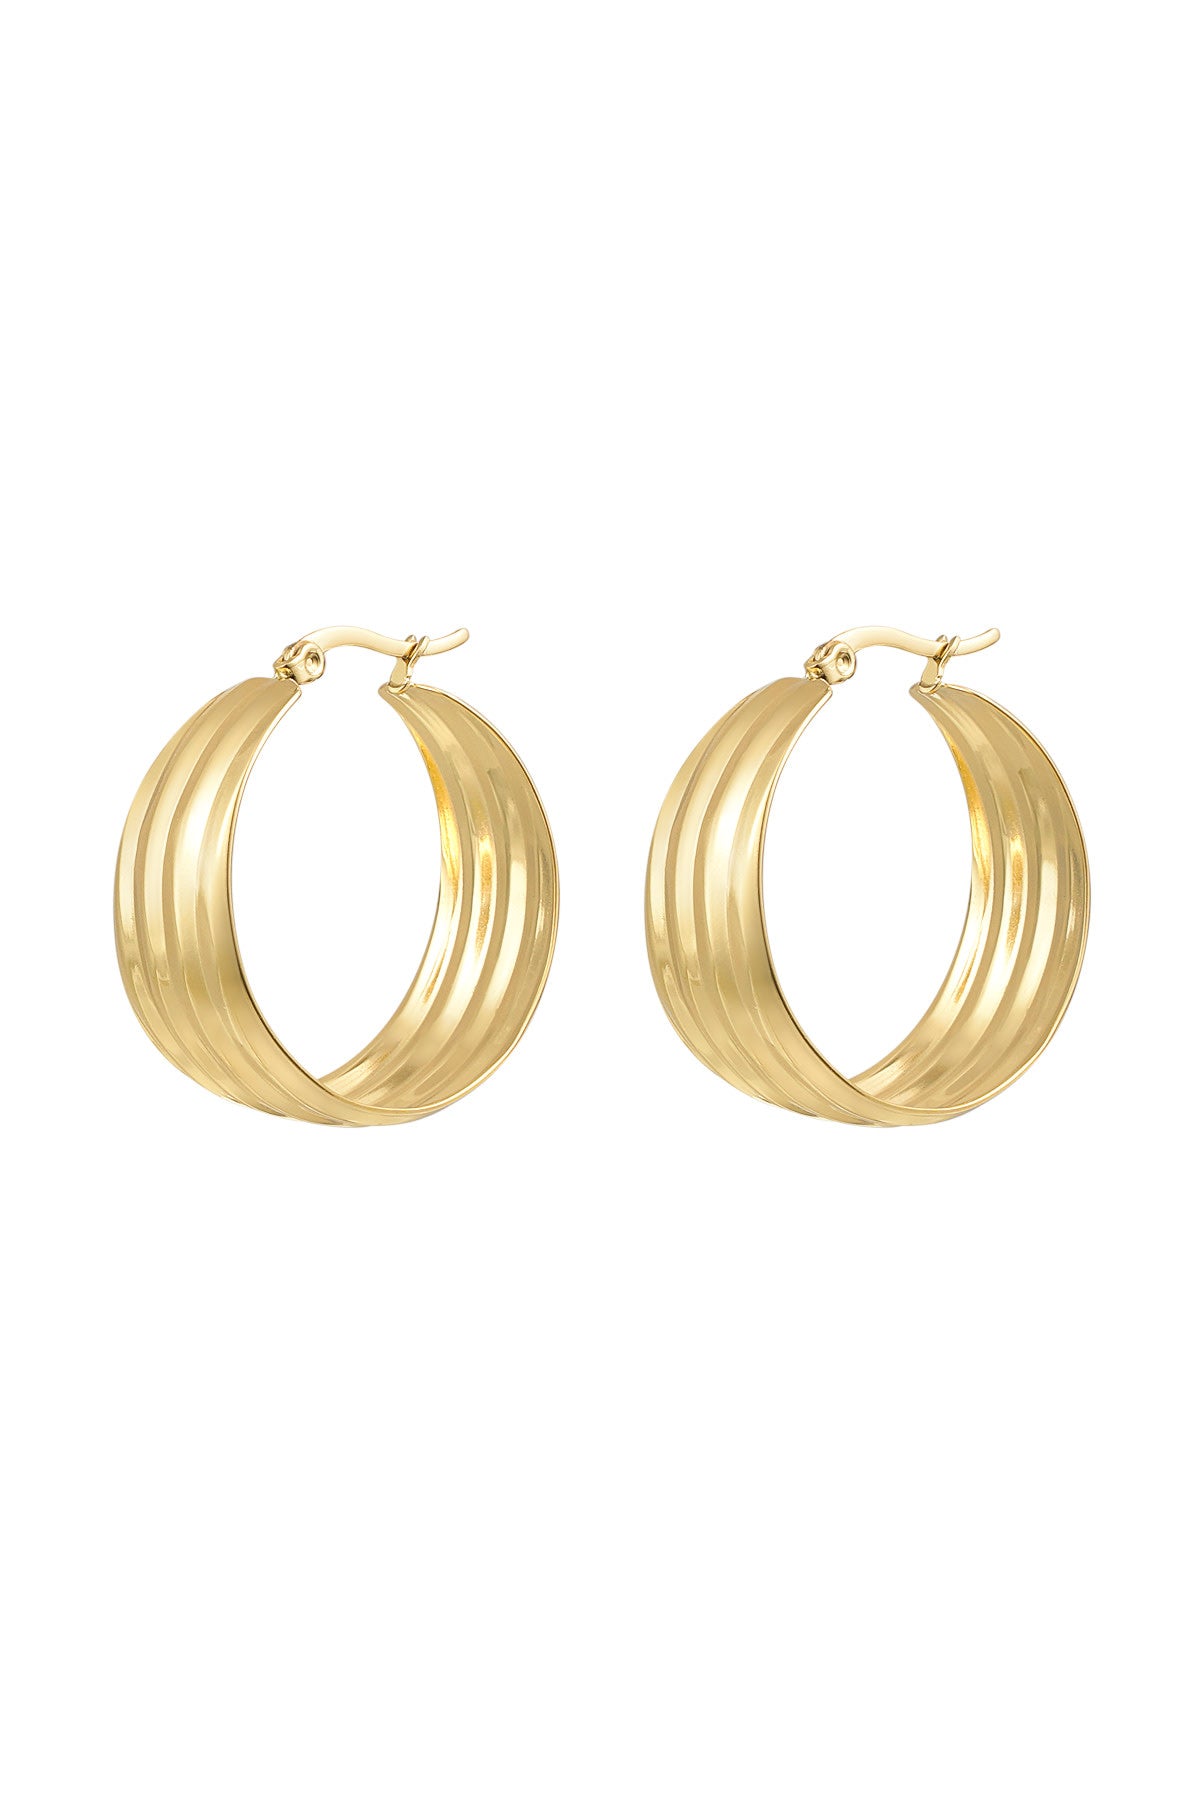 Stainless steel earrings betty gold